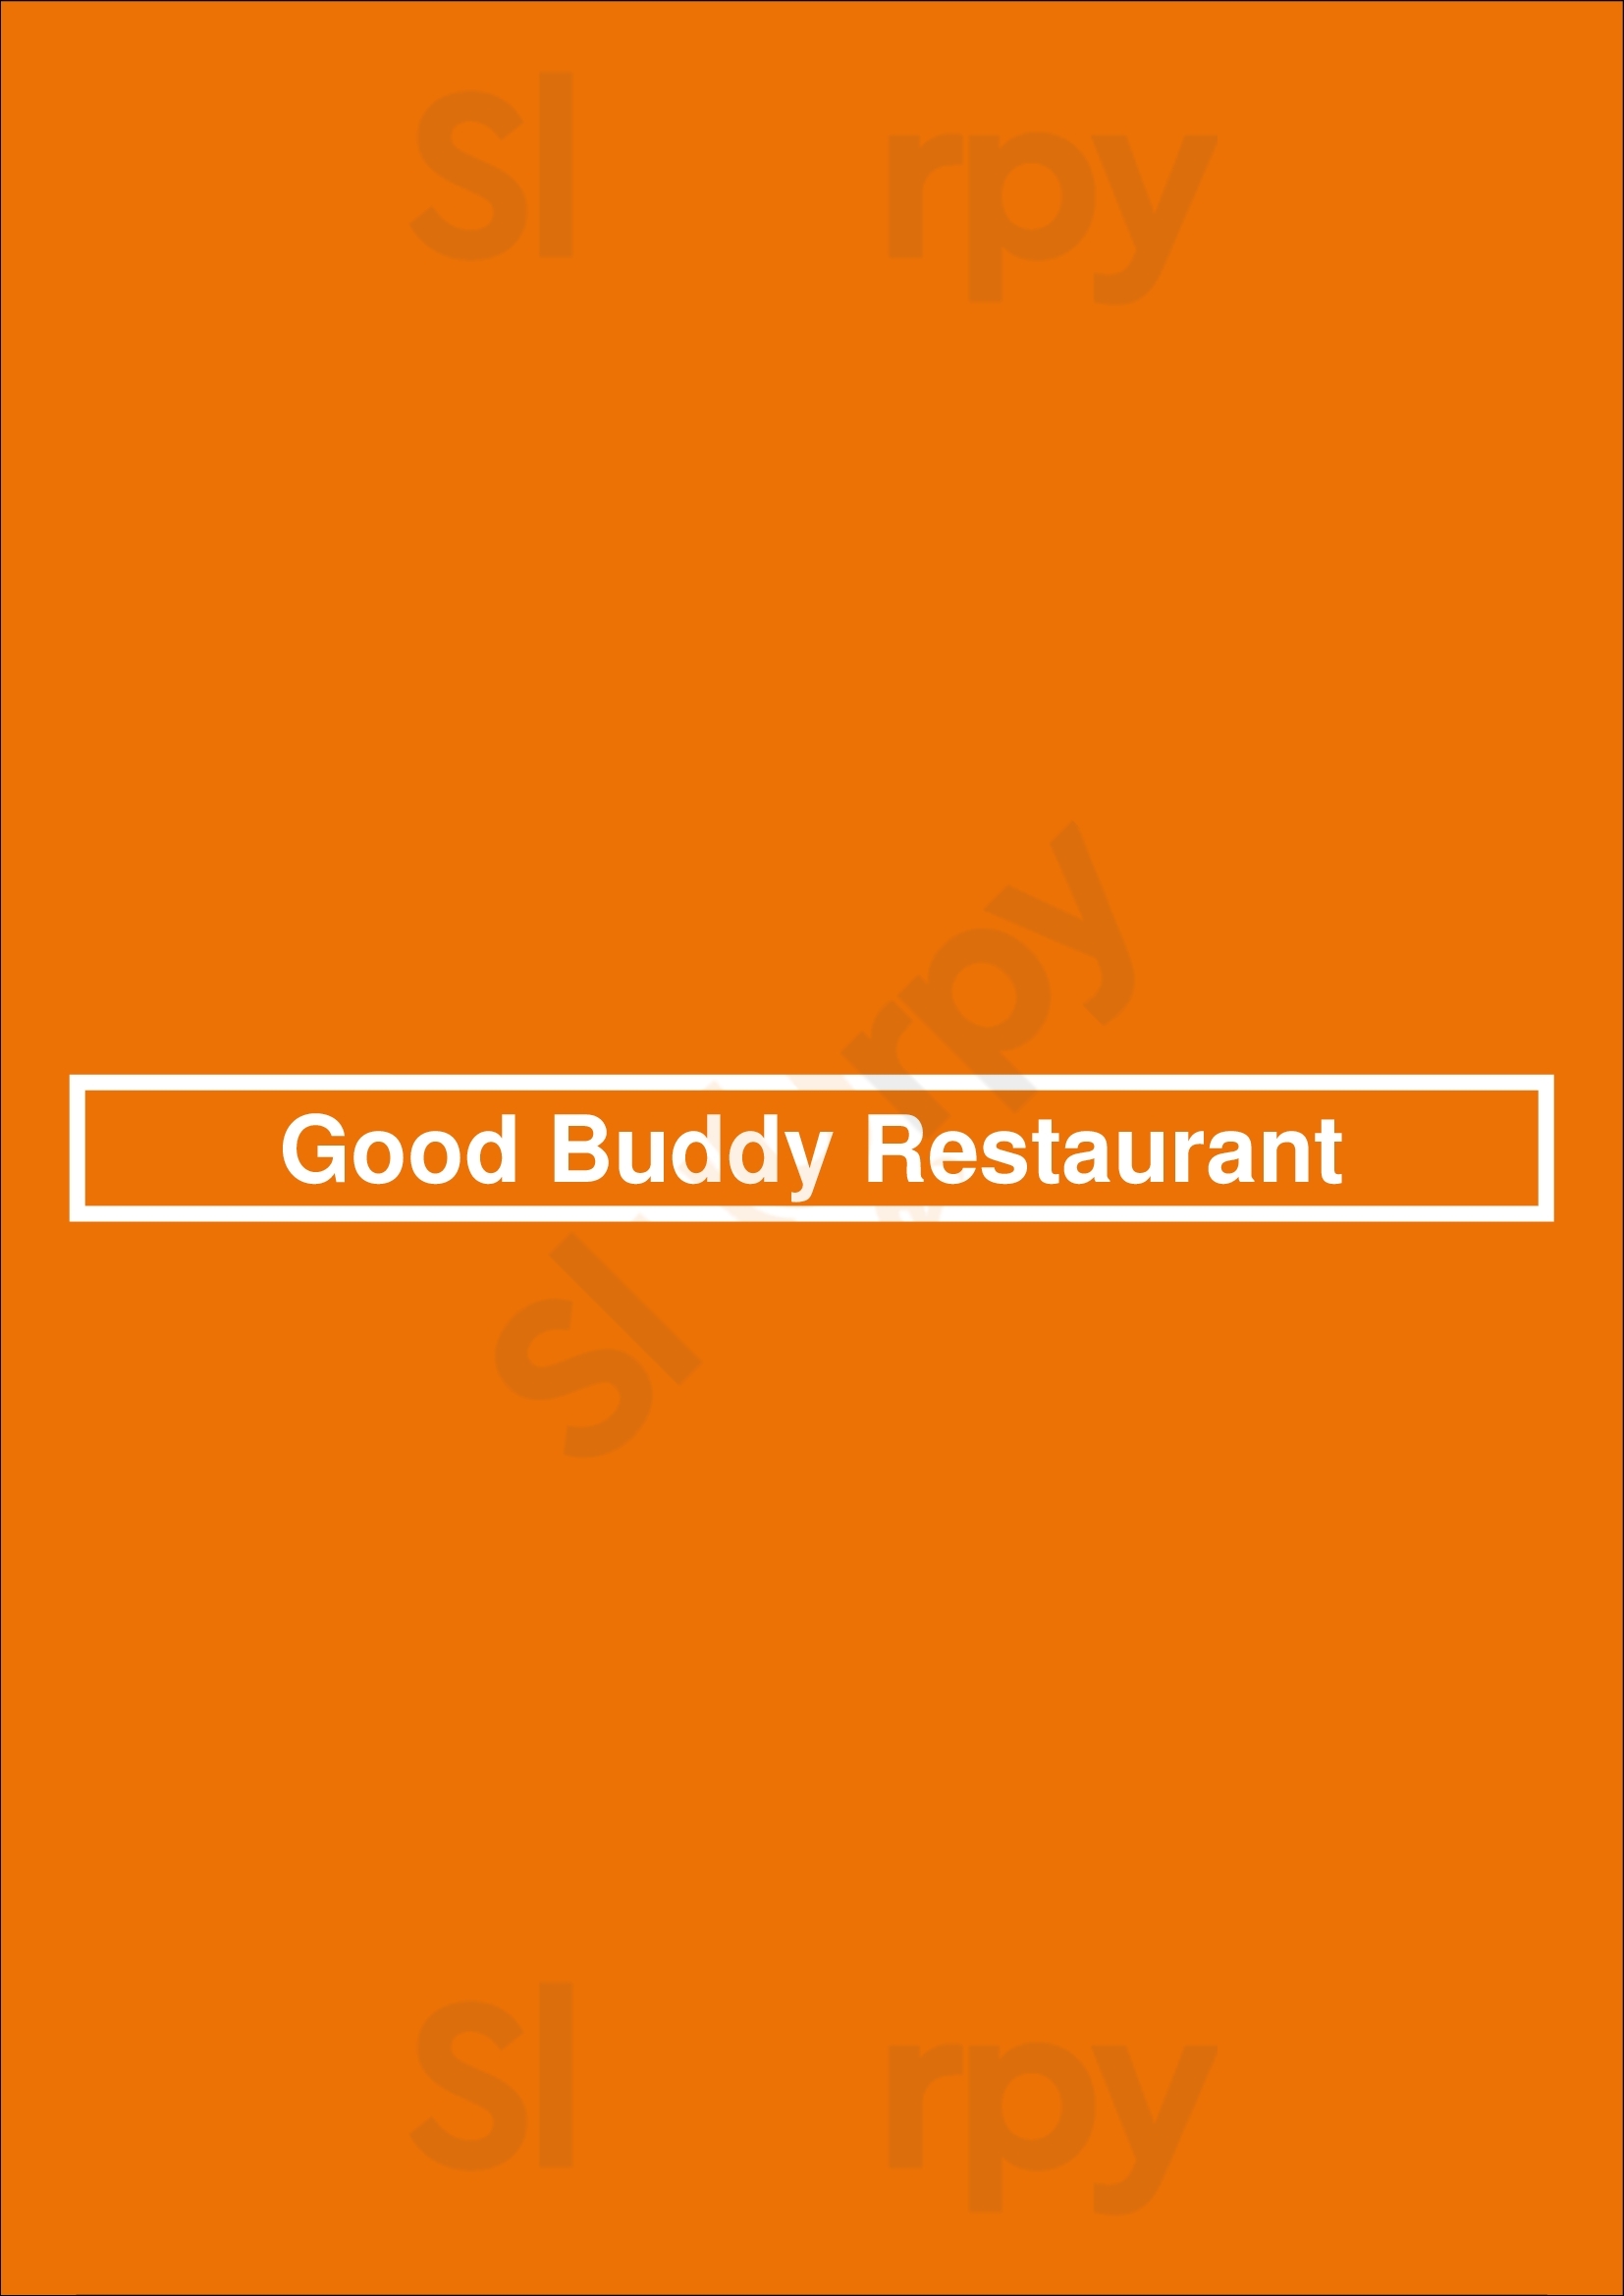 Good Buddy Restaurant Edmonton Menu - 1